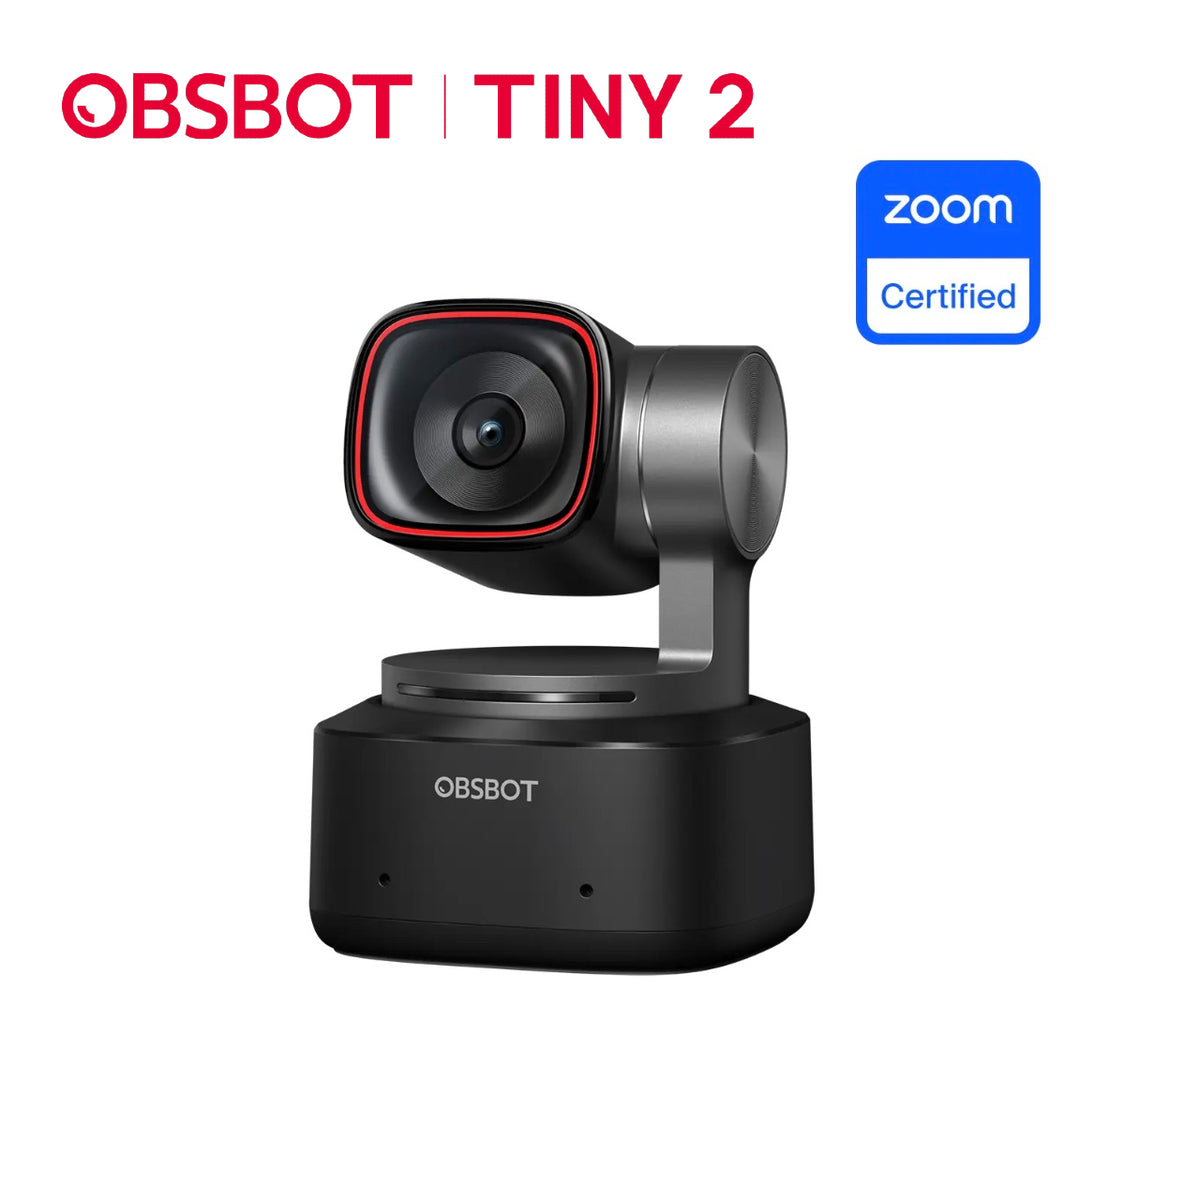 【OBSBOT Tiny 2 】AI人臉辨識與人物自動追蹤的PTZ 4K 網路攝影機